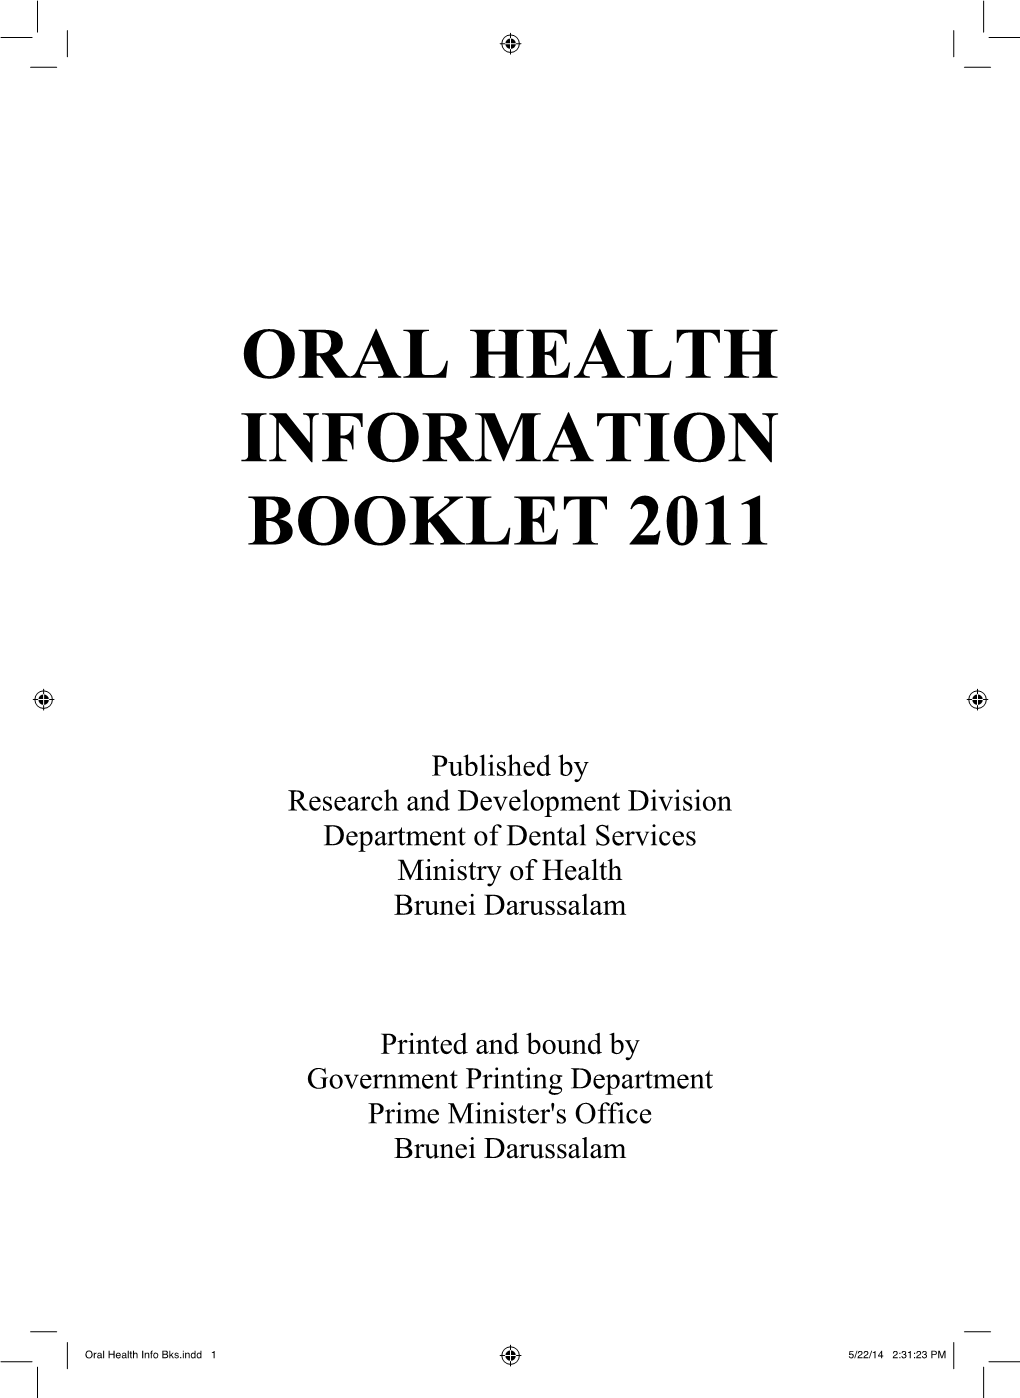 Oral Health Information Booklet 2011